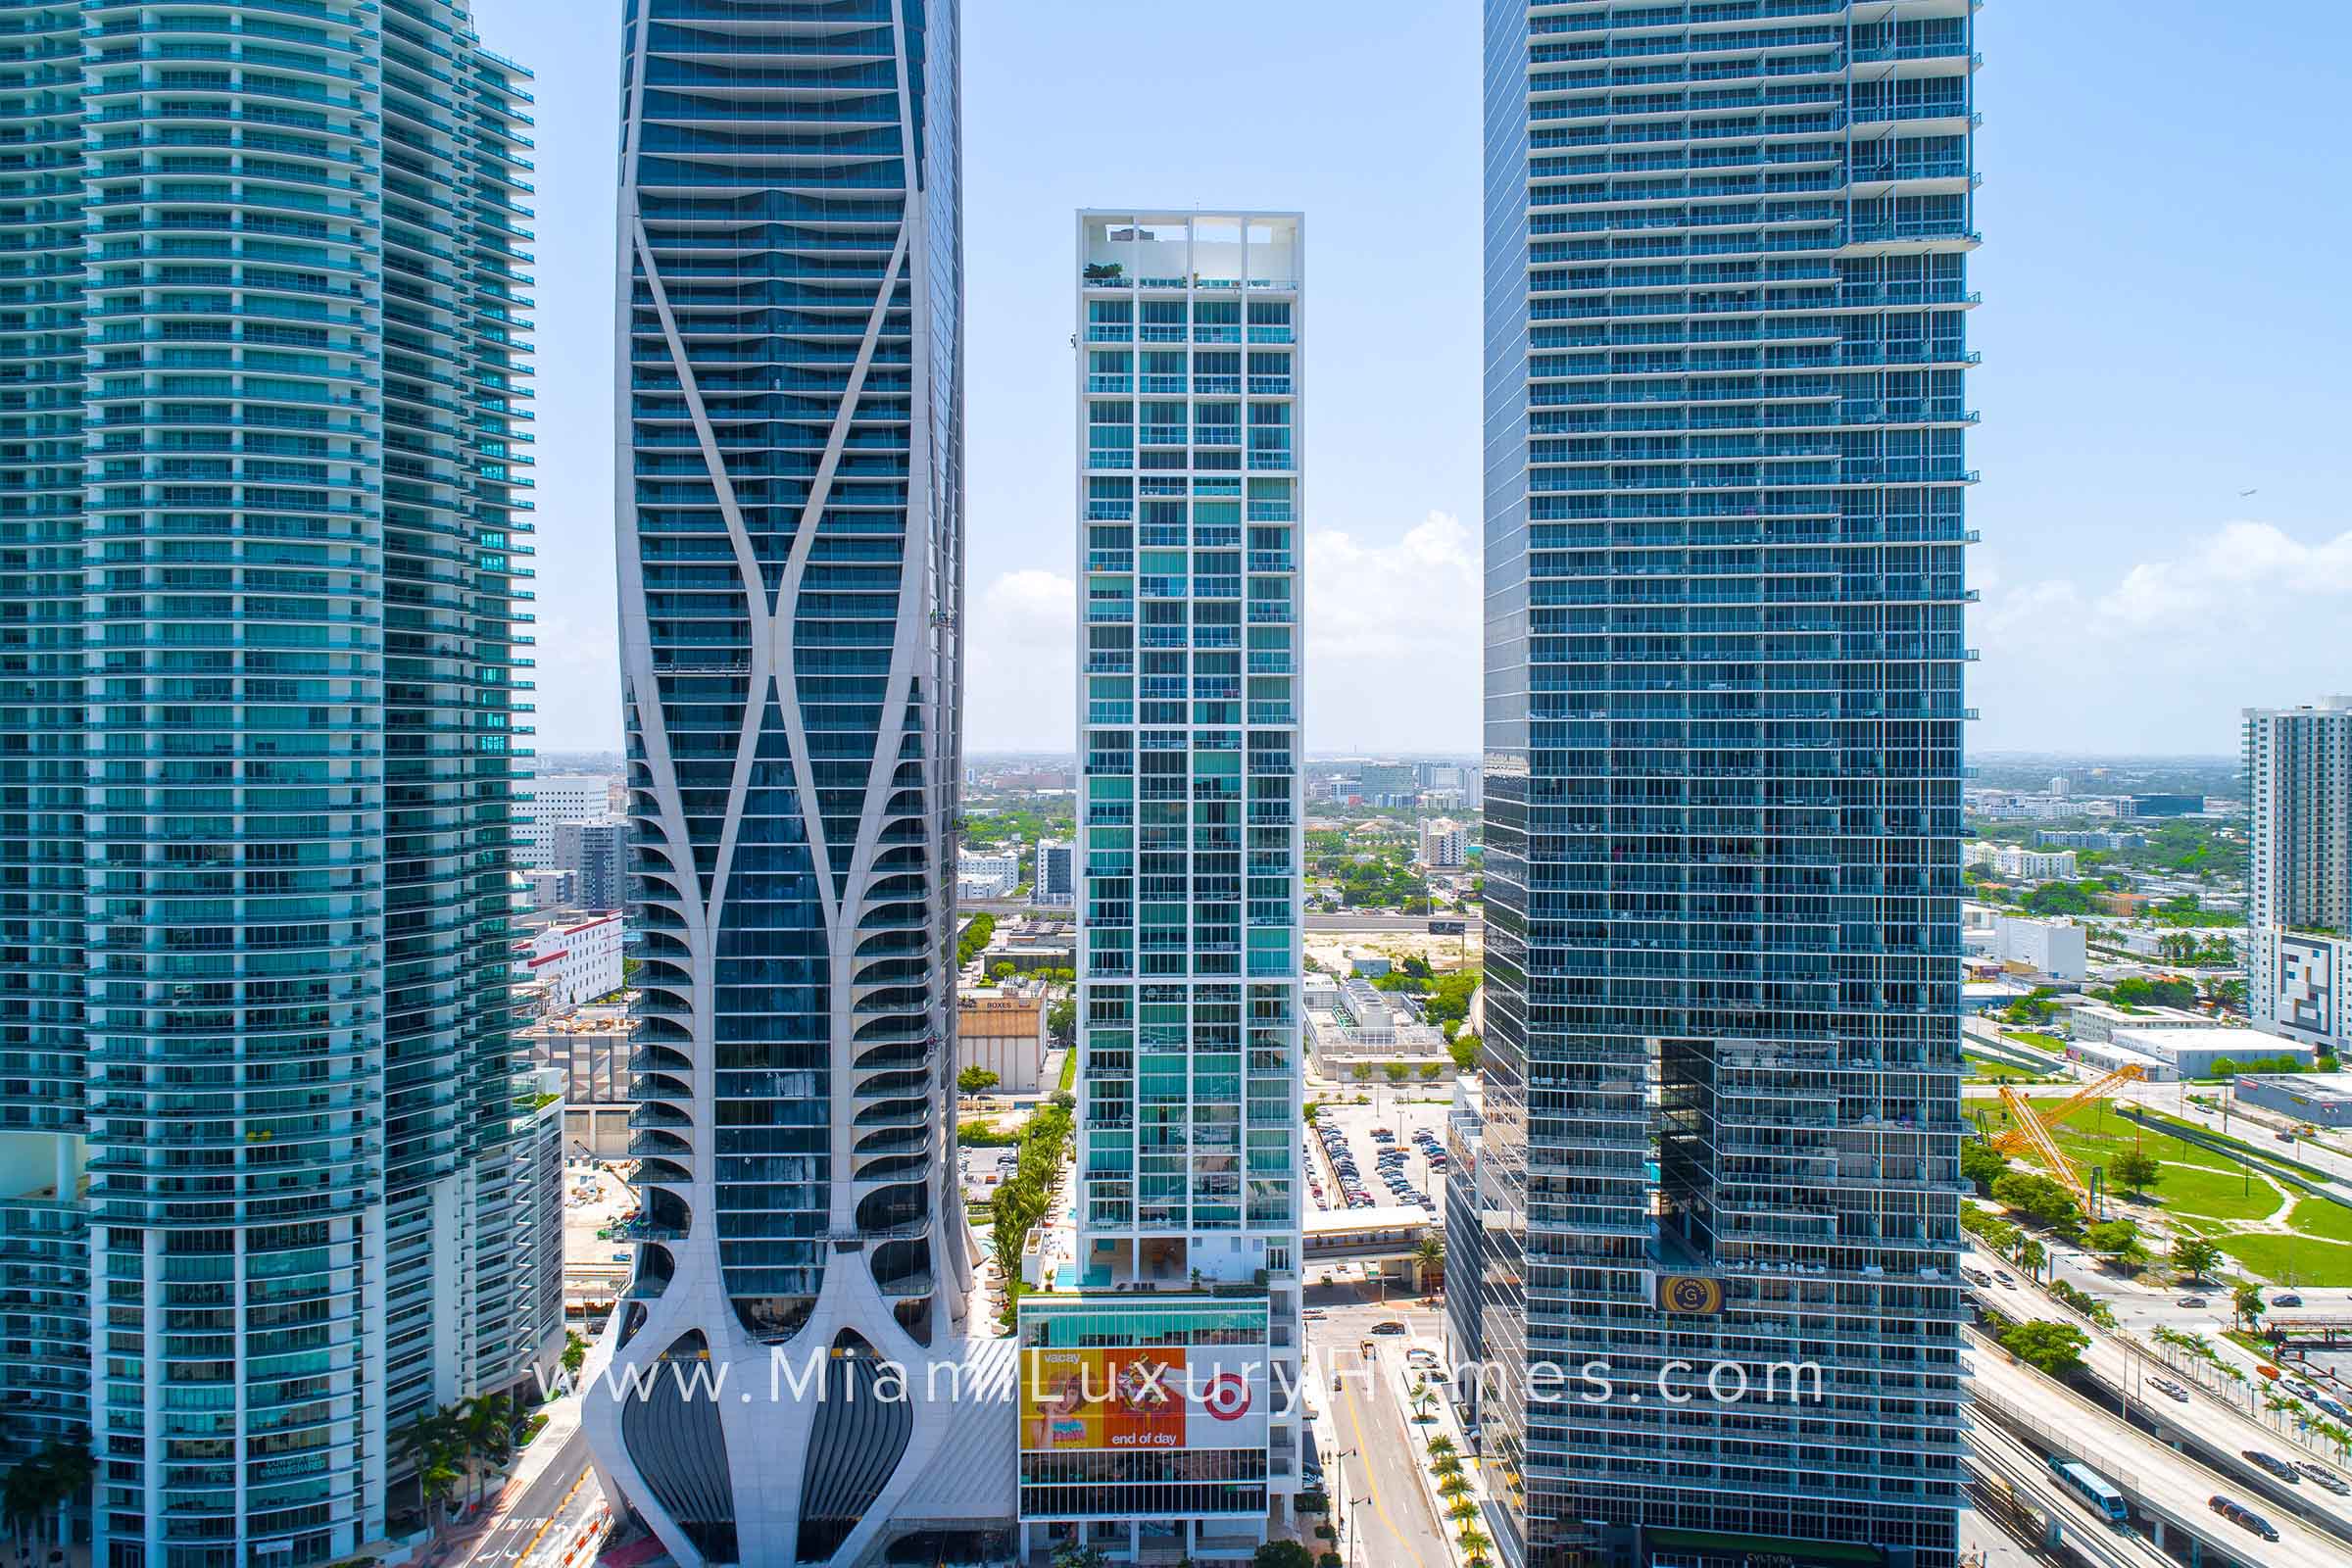 Ten Museum Park Condo Building in Downtown Miami